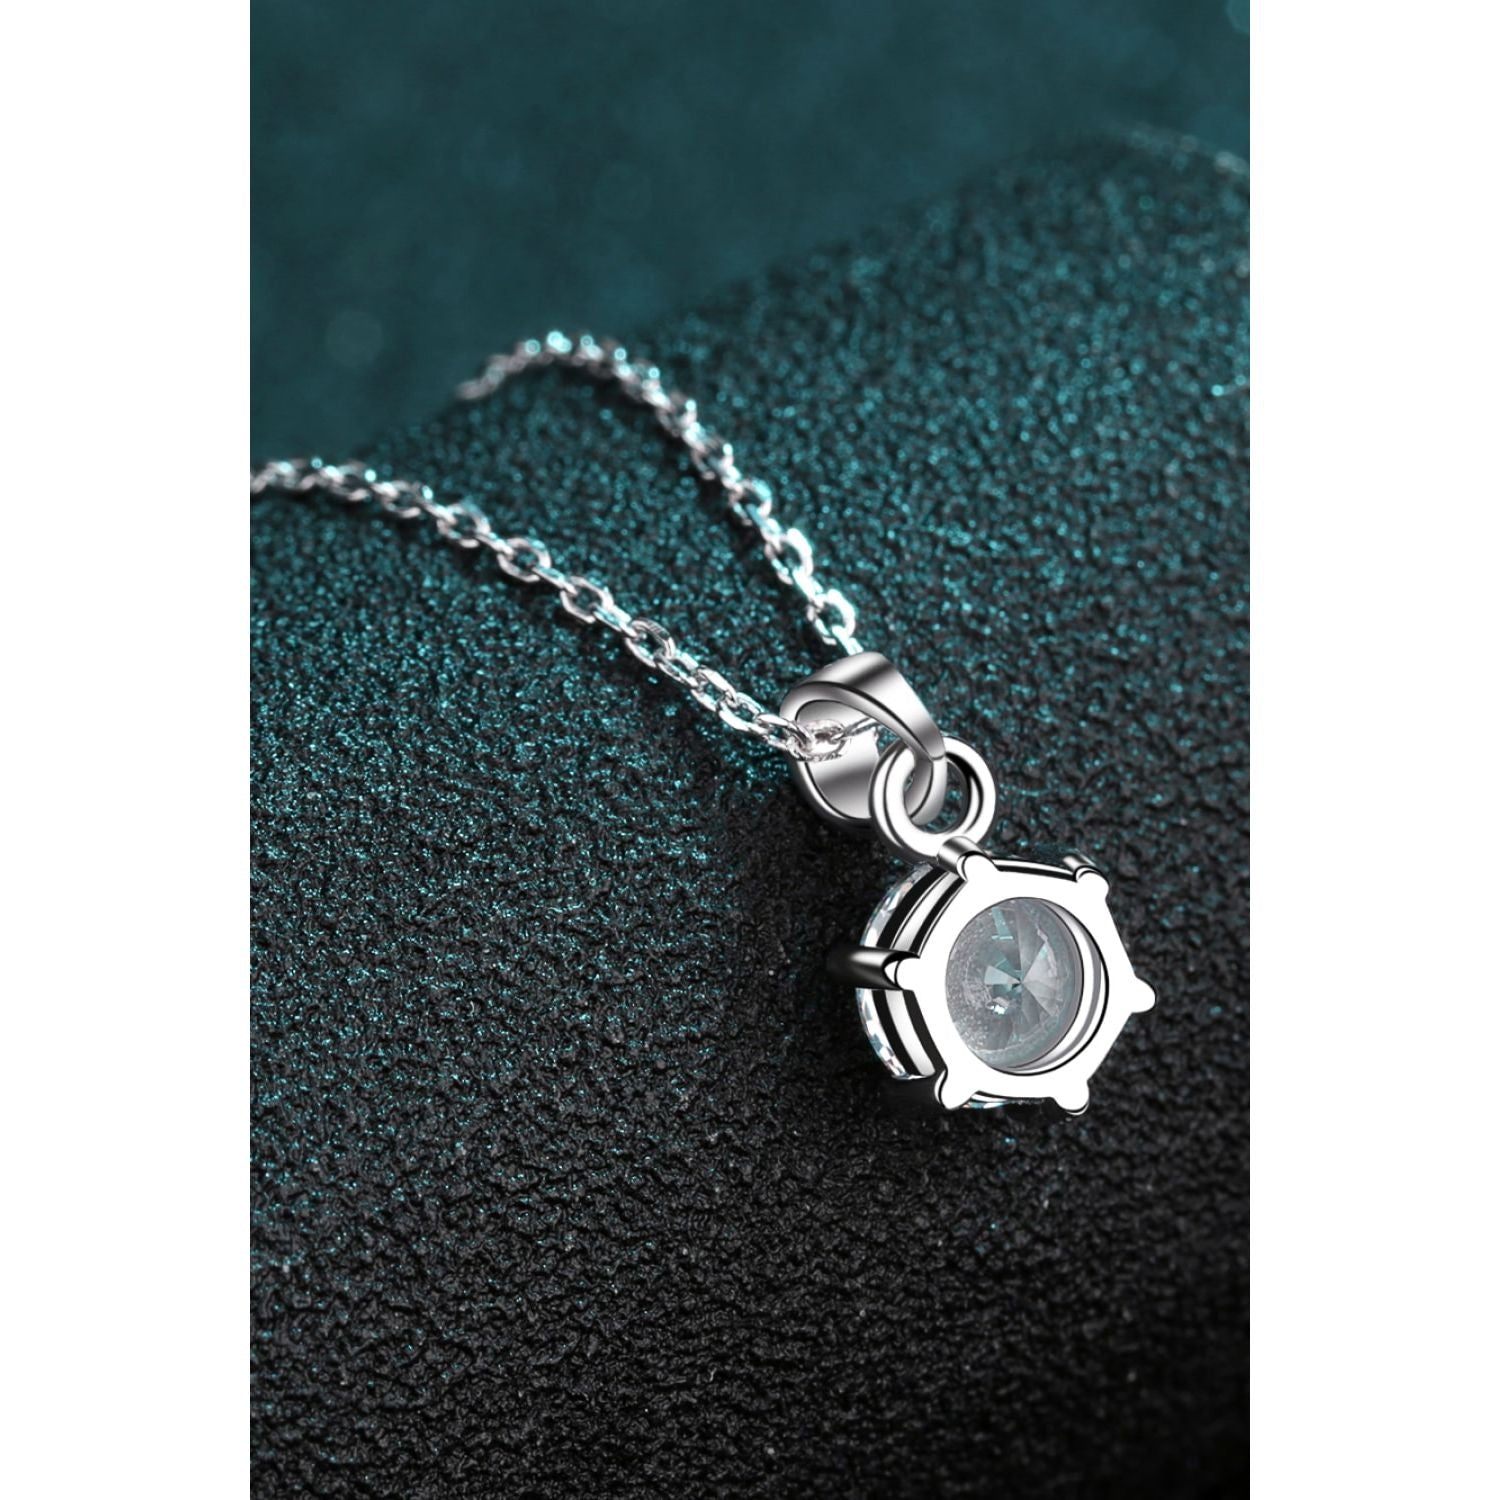 Get What You Need Moissanite Pendant Necklace - TiffanyzKlozet